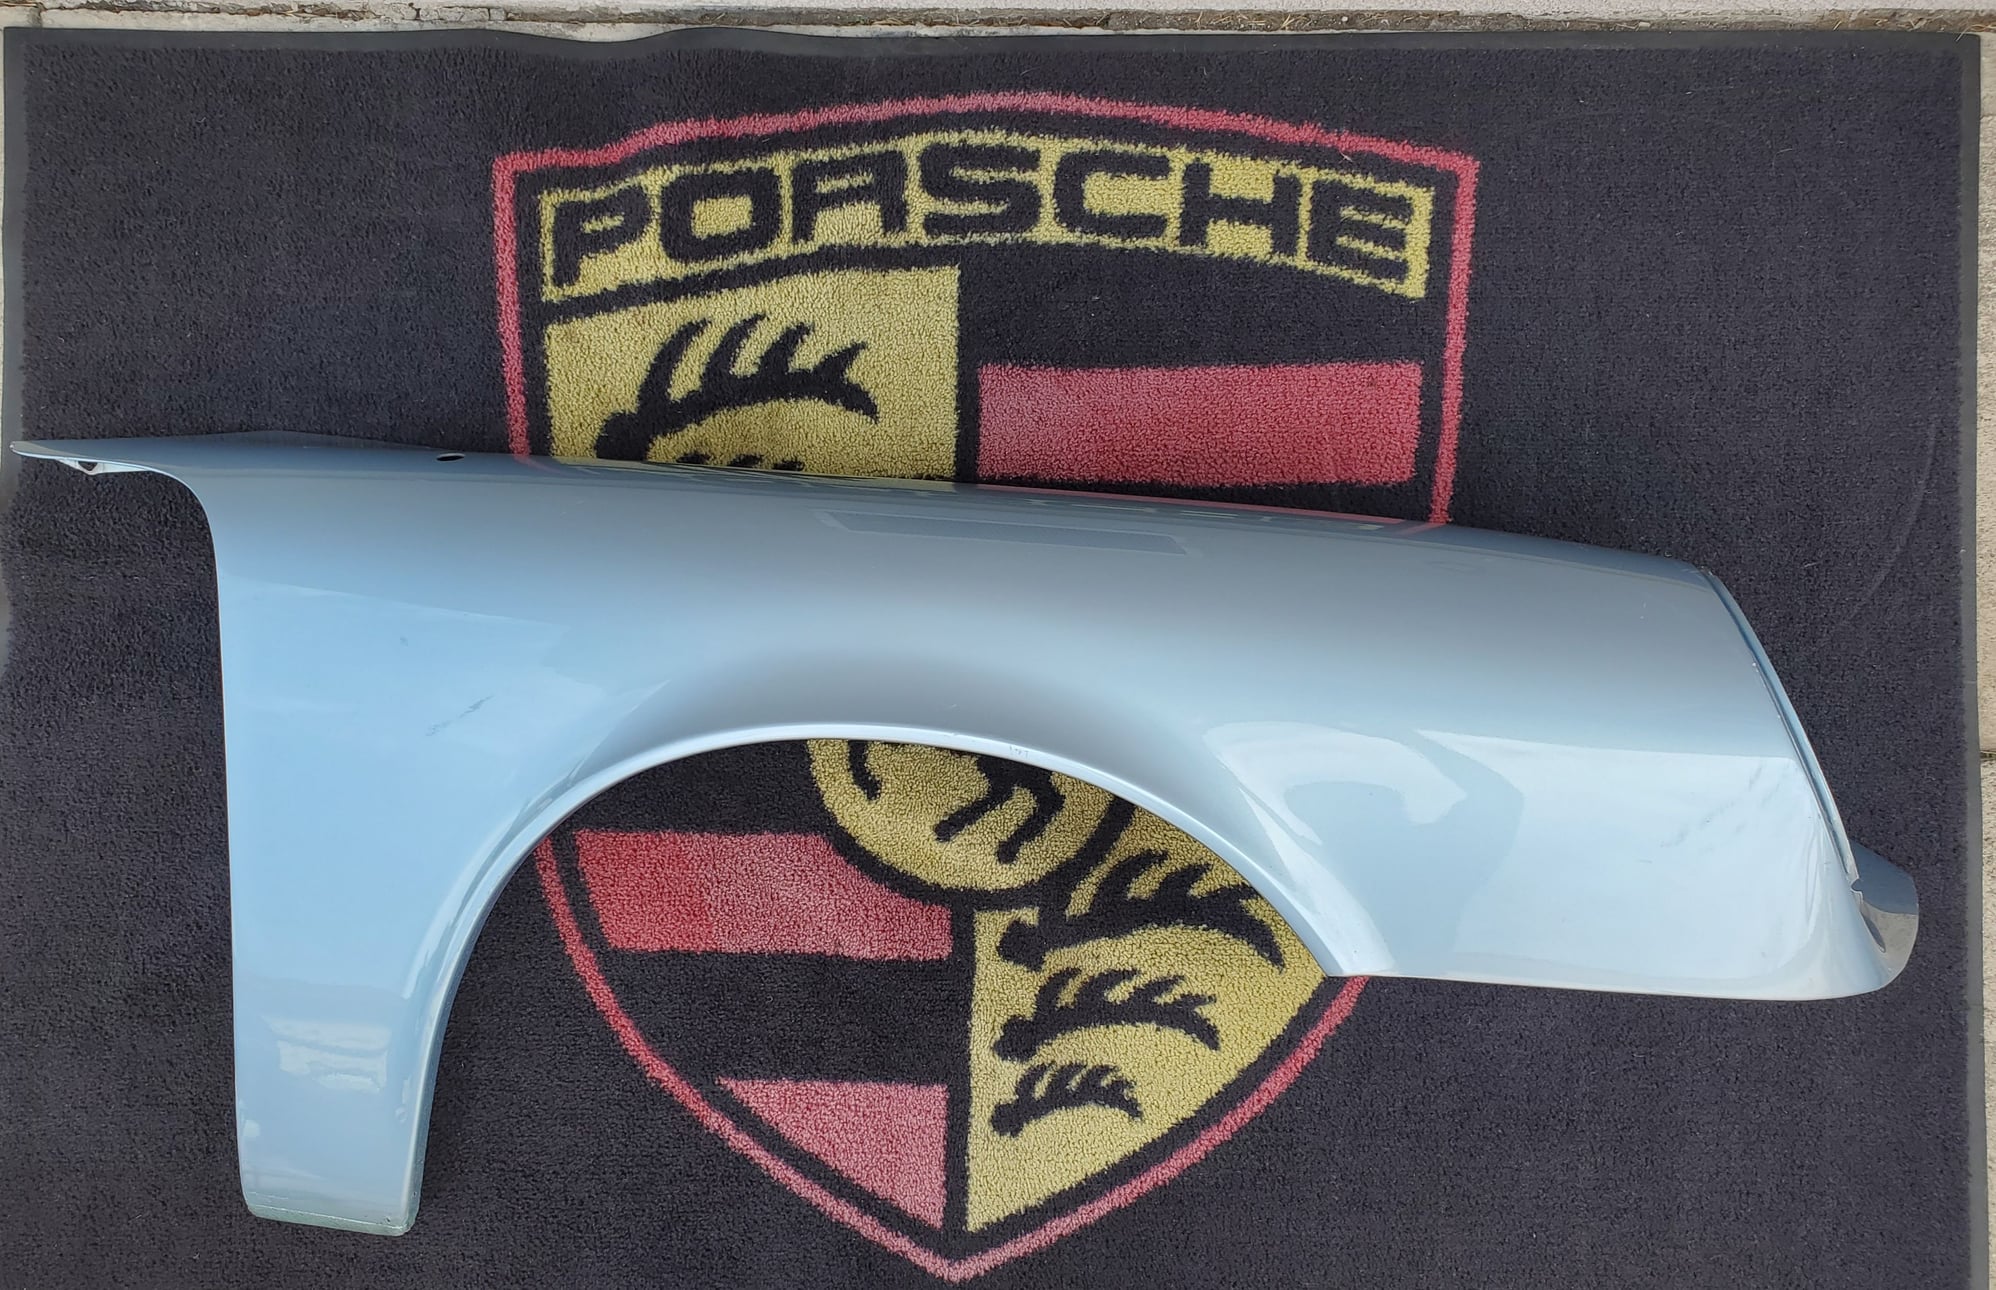 Exterior Body Parts - Porsche 911 74-89 Narrow Body Iris Blue Fenders - Used - 1974 to 1989 Porsche 911 - Los Angeles, CA 90032, United States